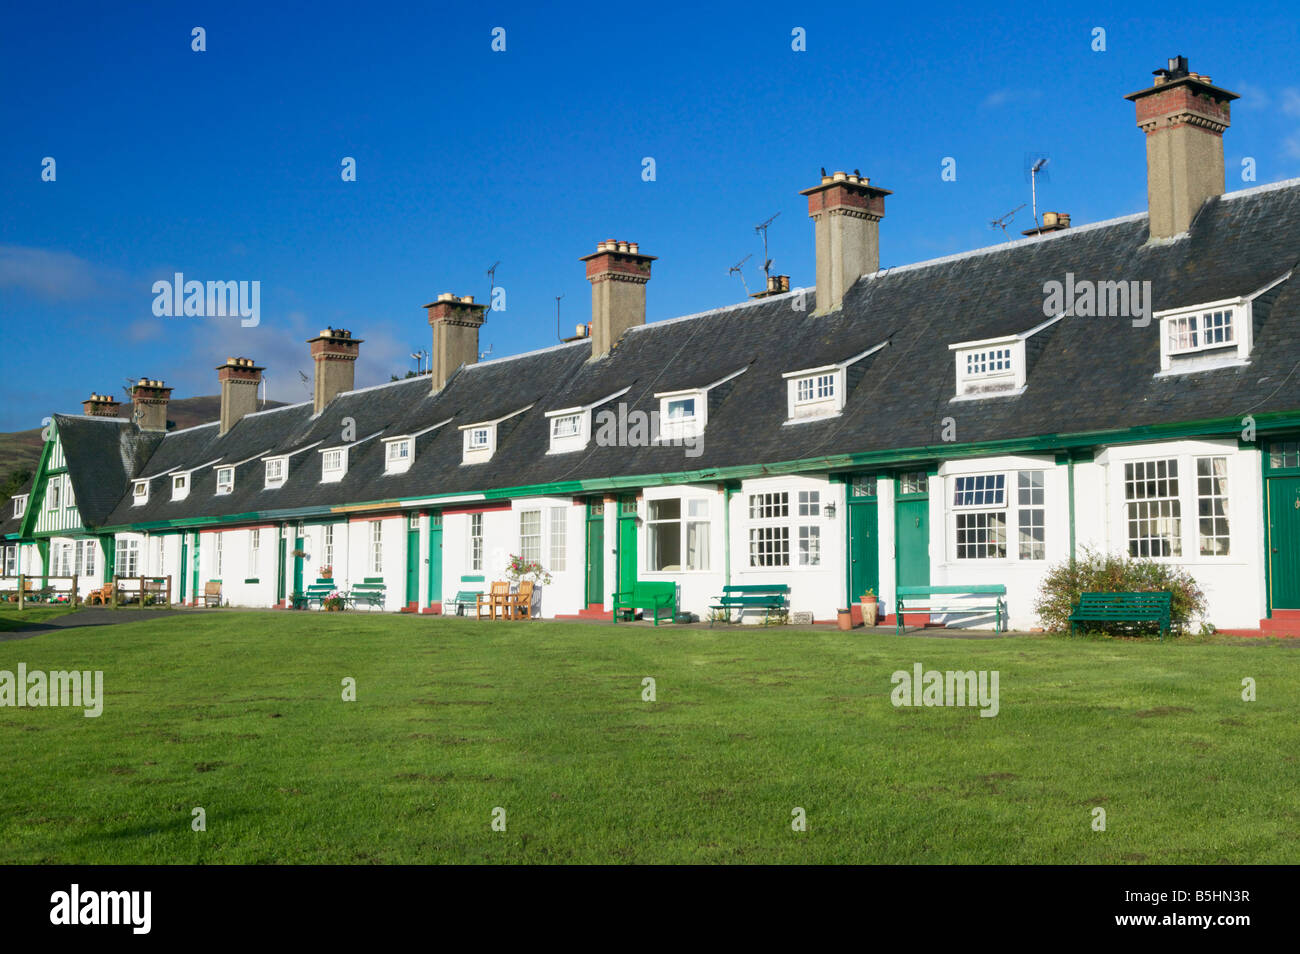 Hamilton Terrace, Lamlash, Isle of Arran, North Lanarkshire, Scotland, UK. Stock Photo